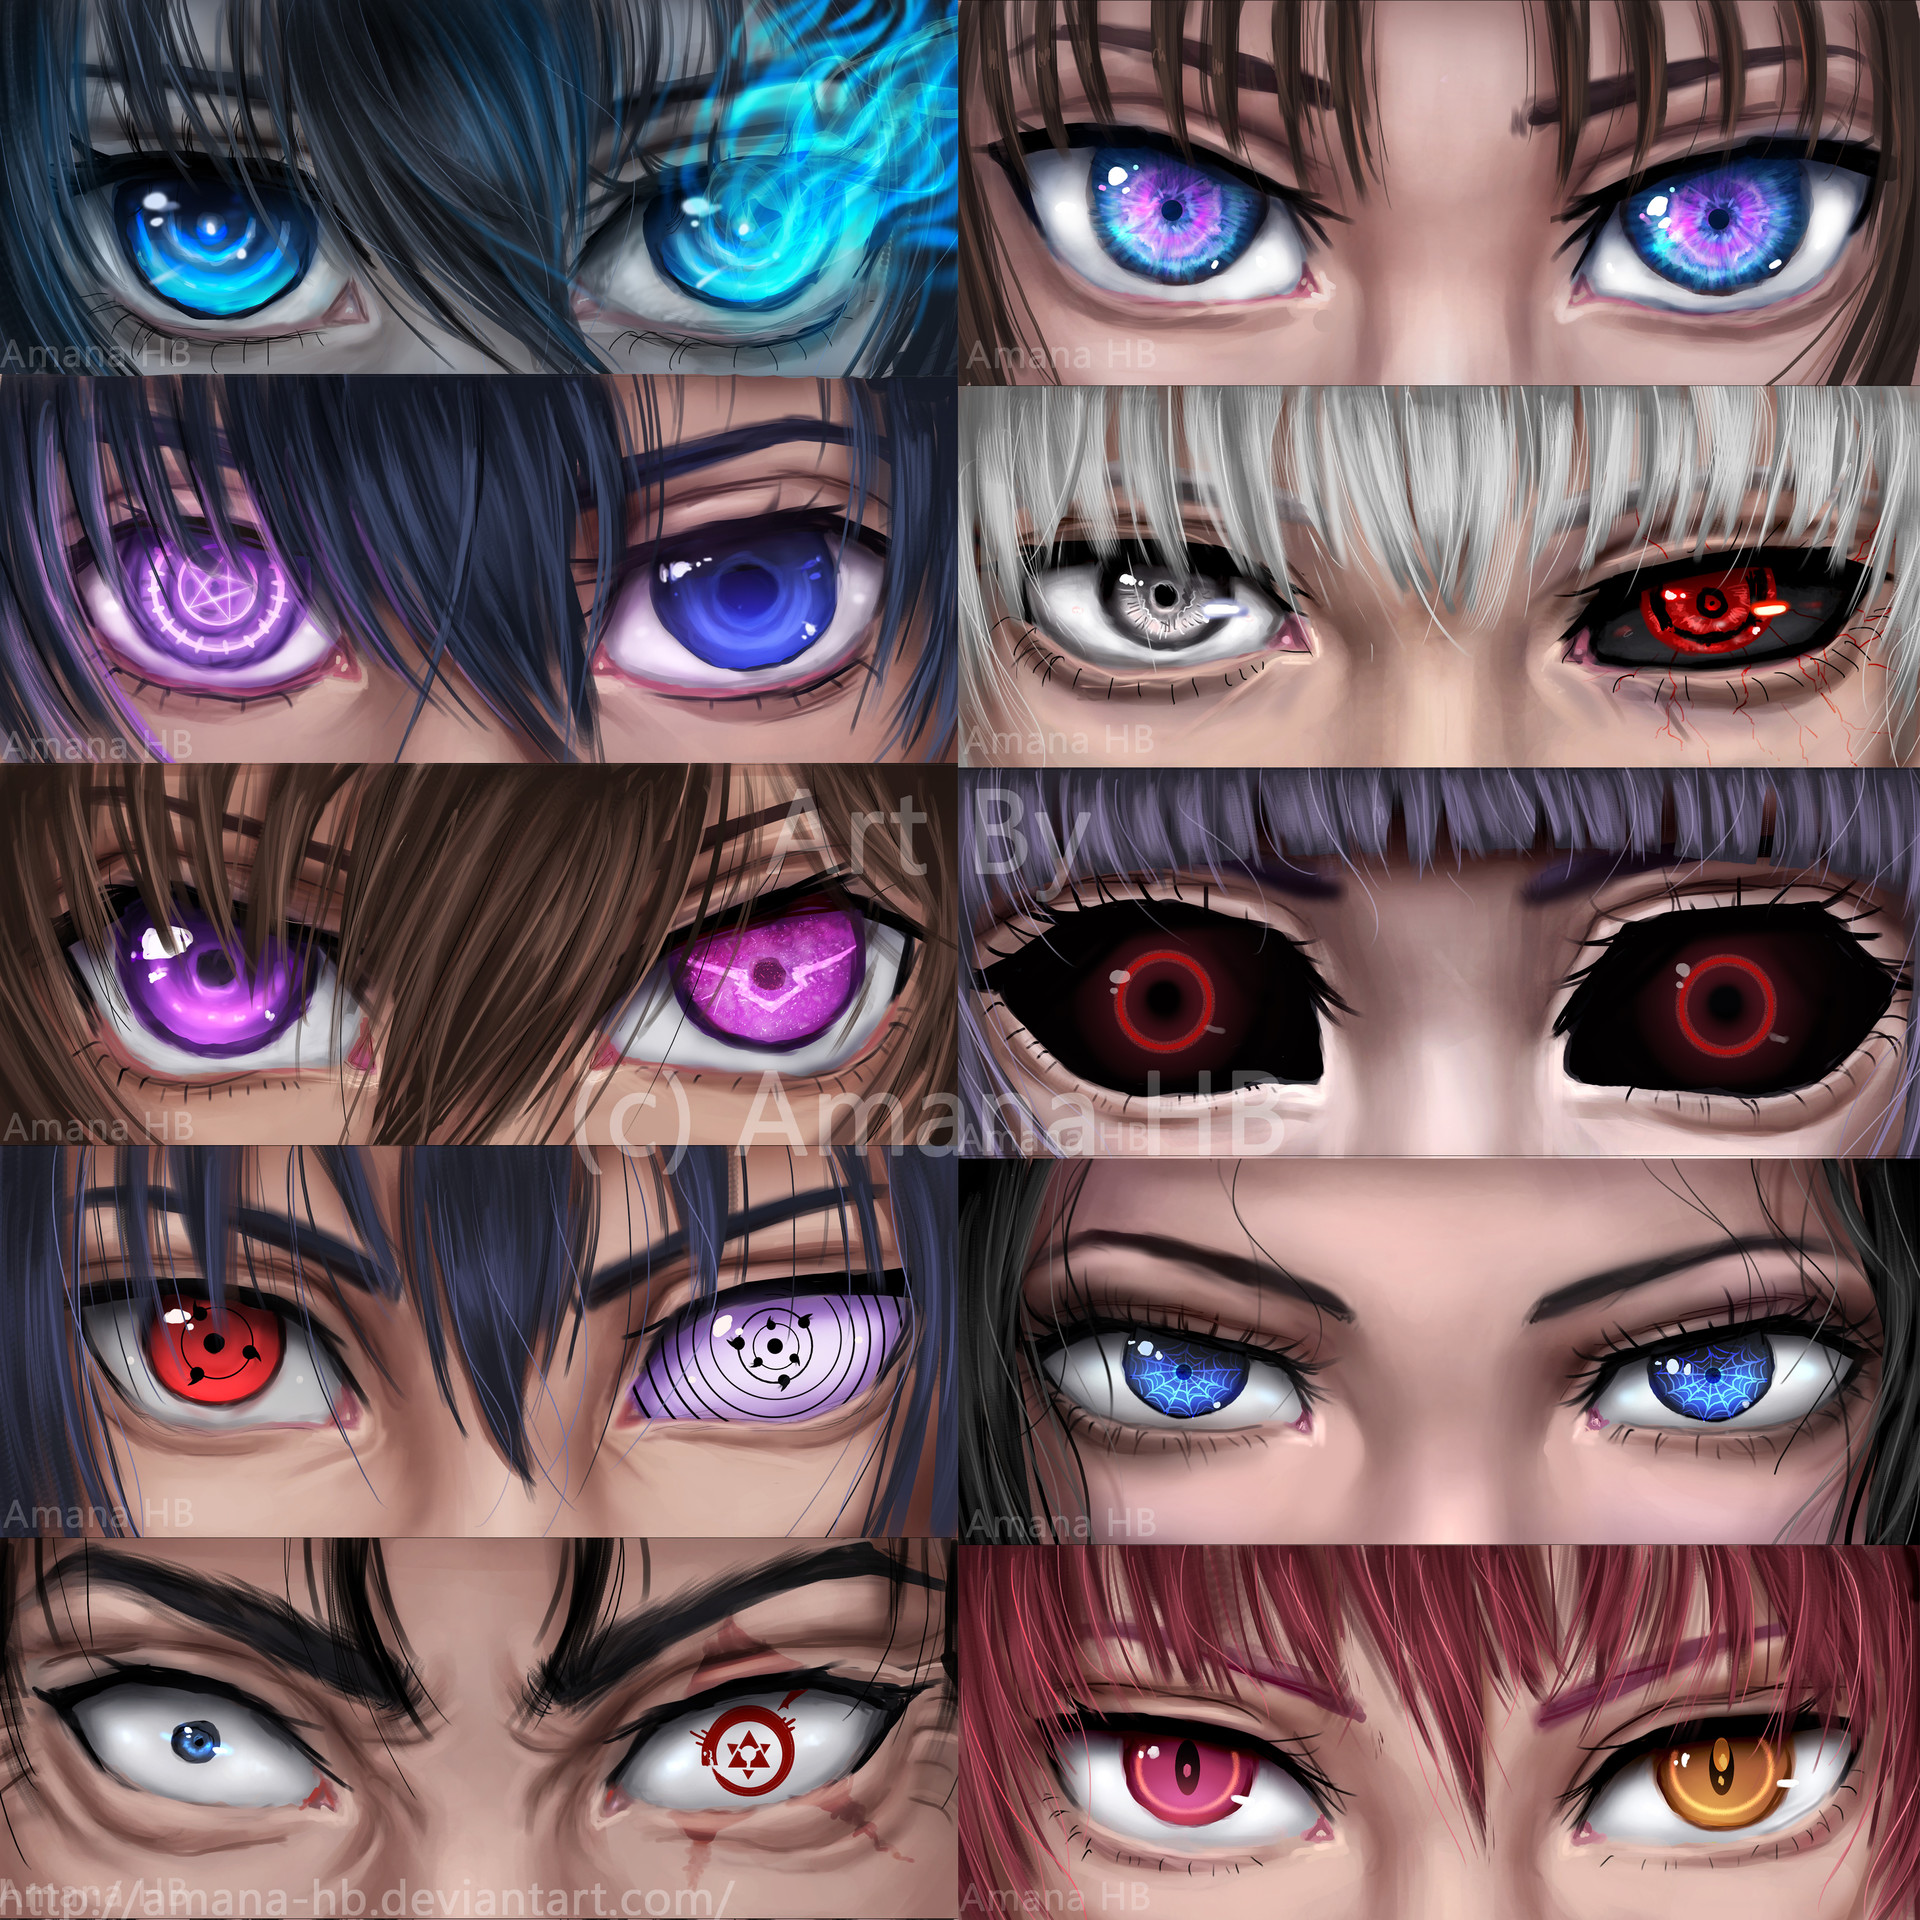 ArtStation - Anime Eyes, Amana HB